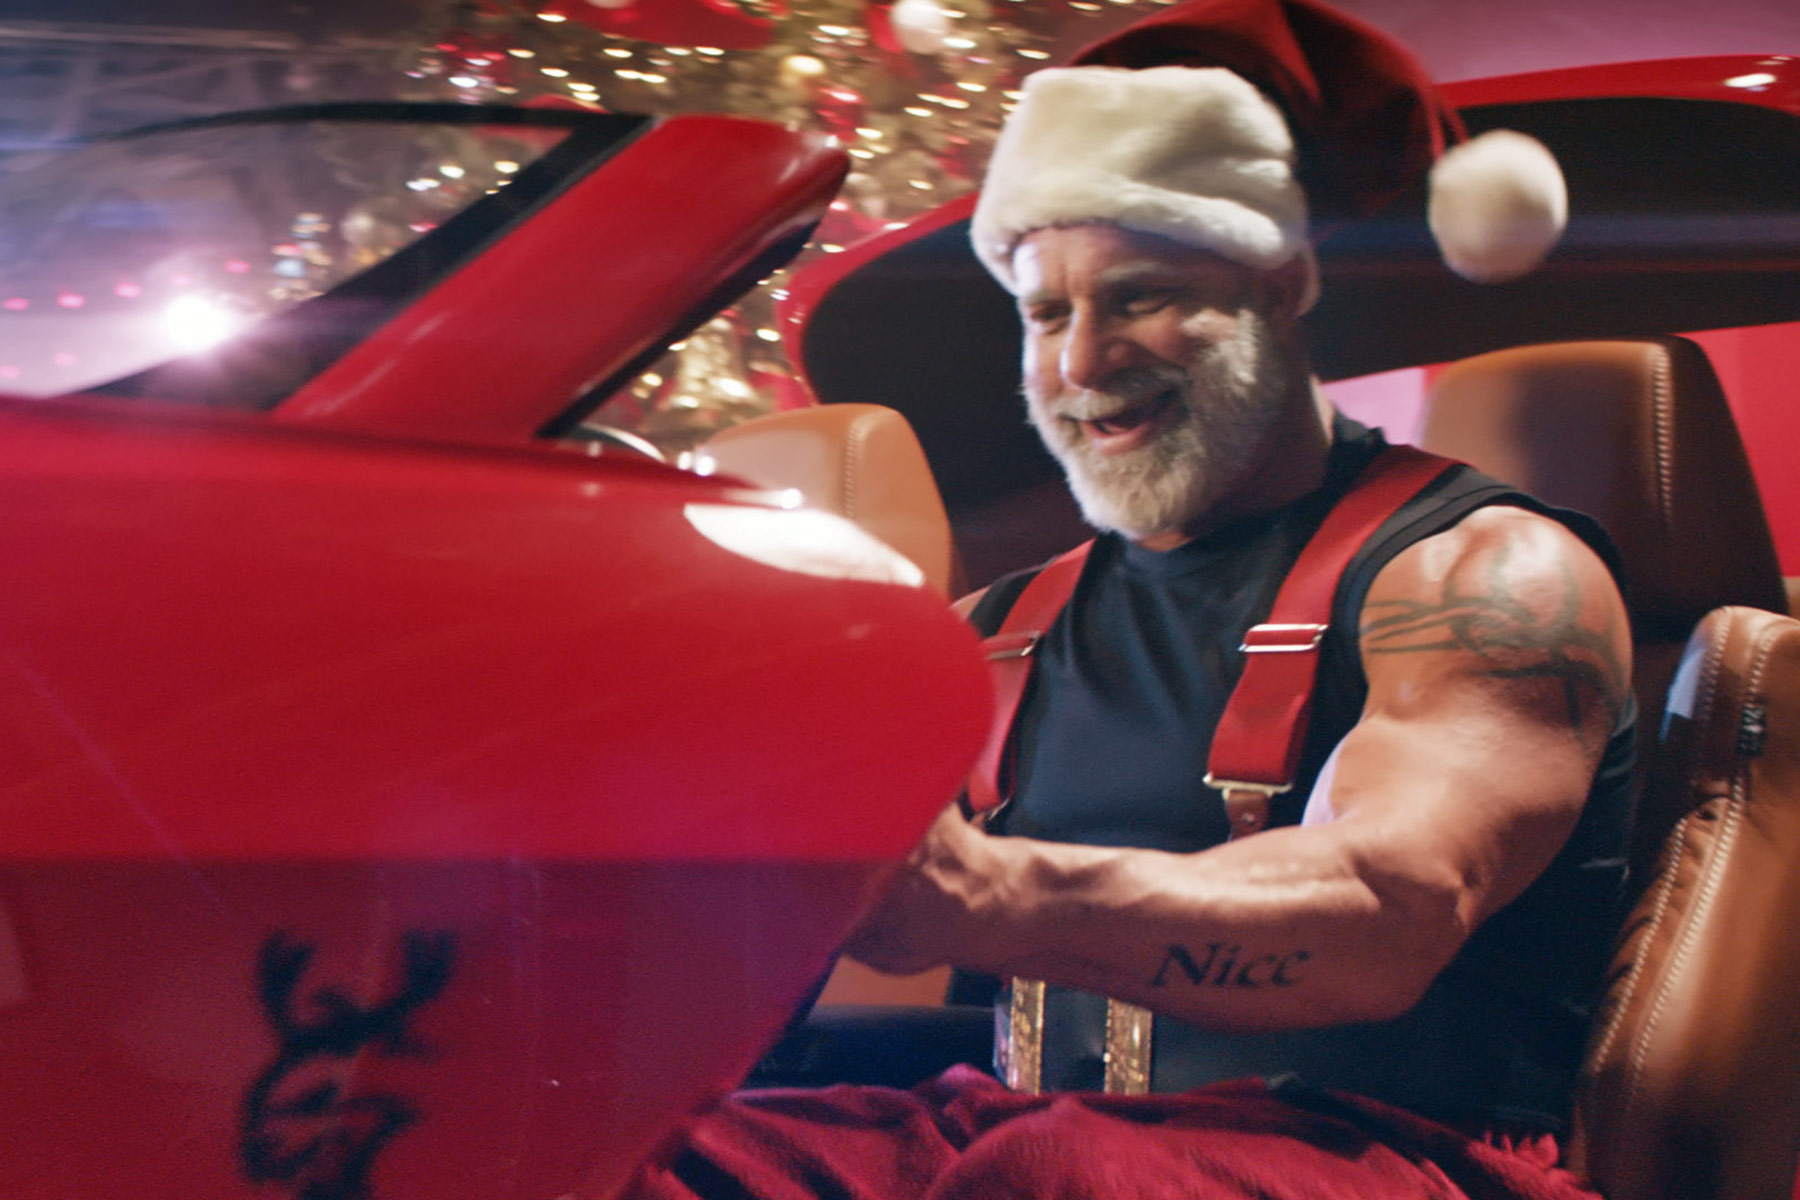 Dodge Redeye Express Hemi sleigh for Santa